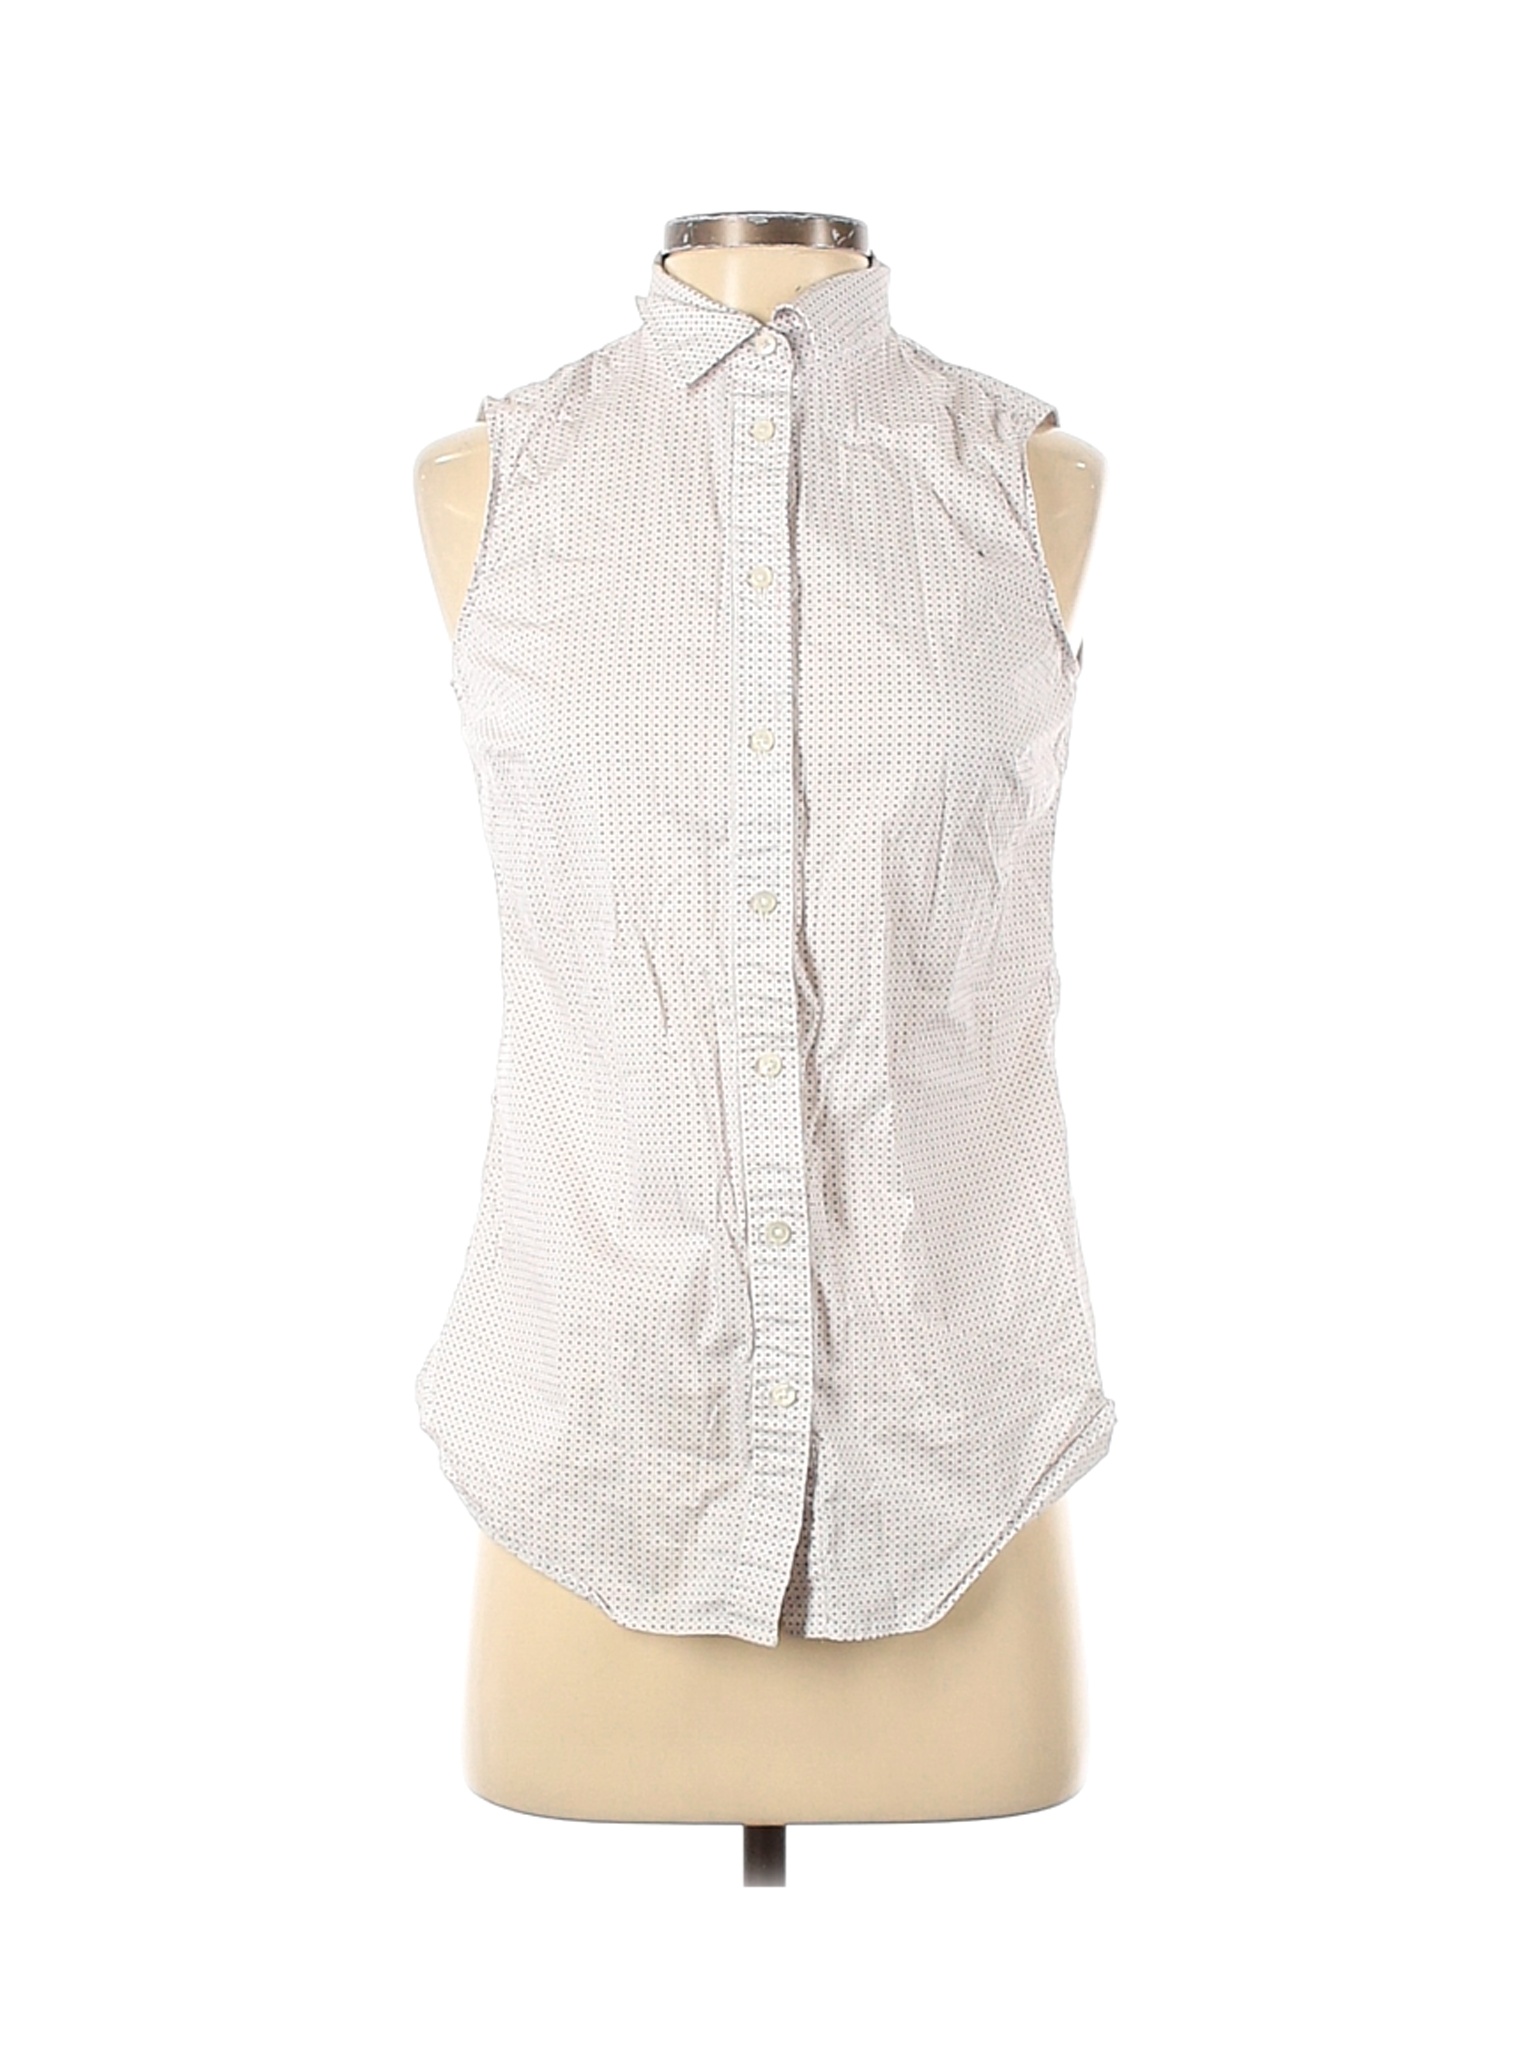 Banana Republic Women White Sleeveless Button-Down Shirt 2 | eBay